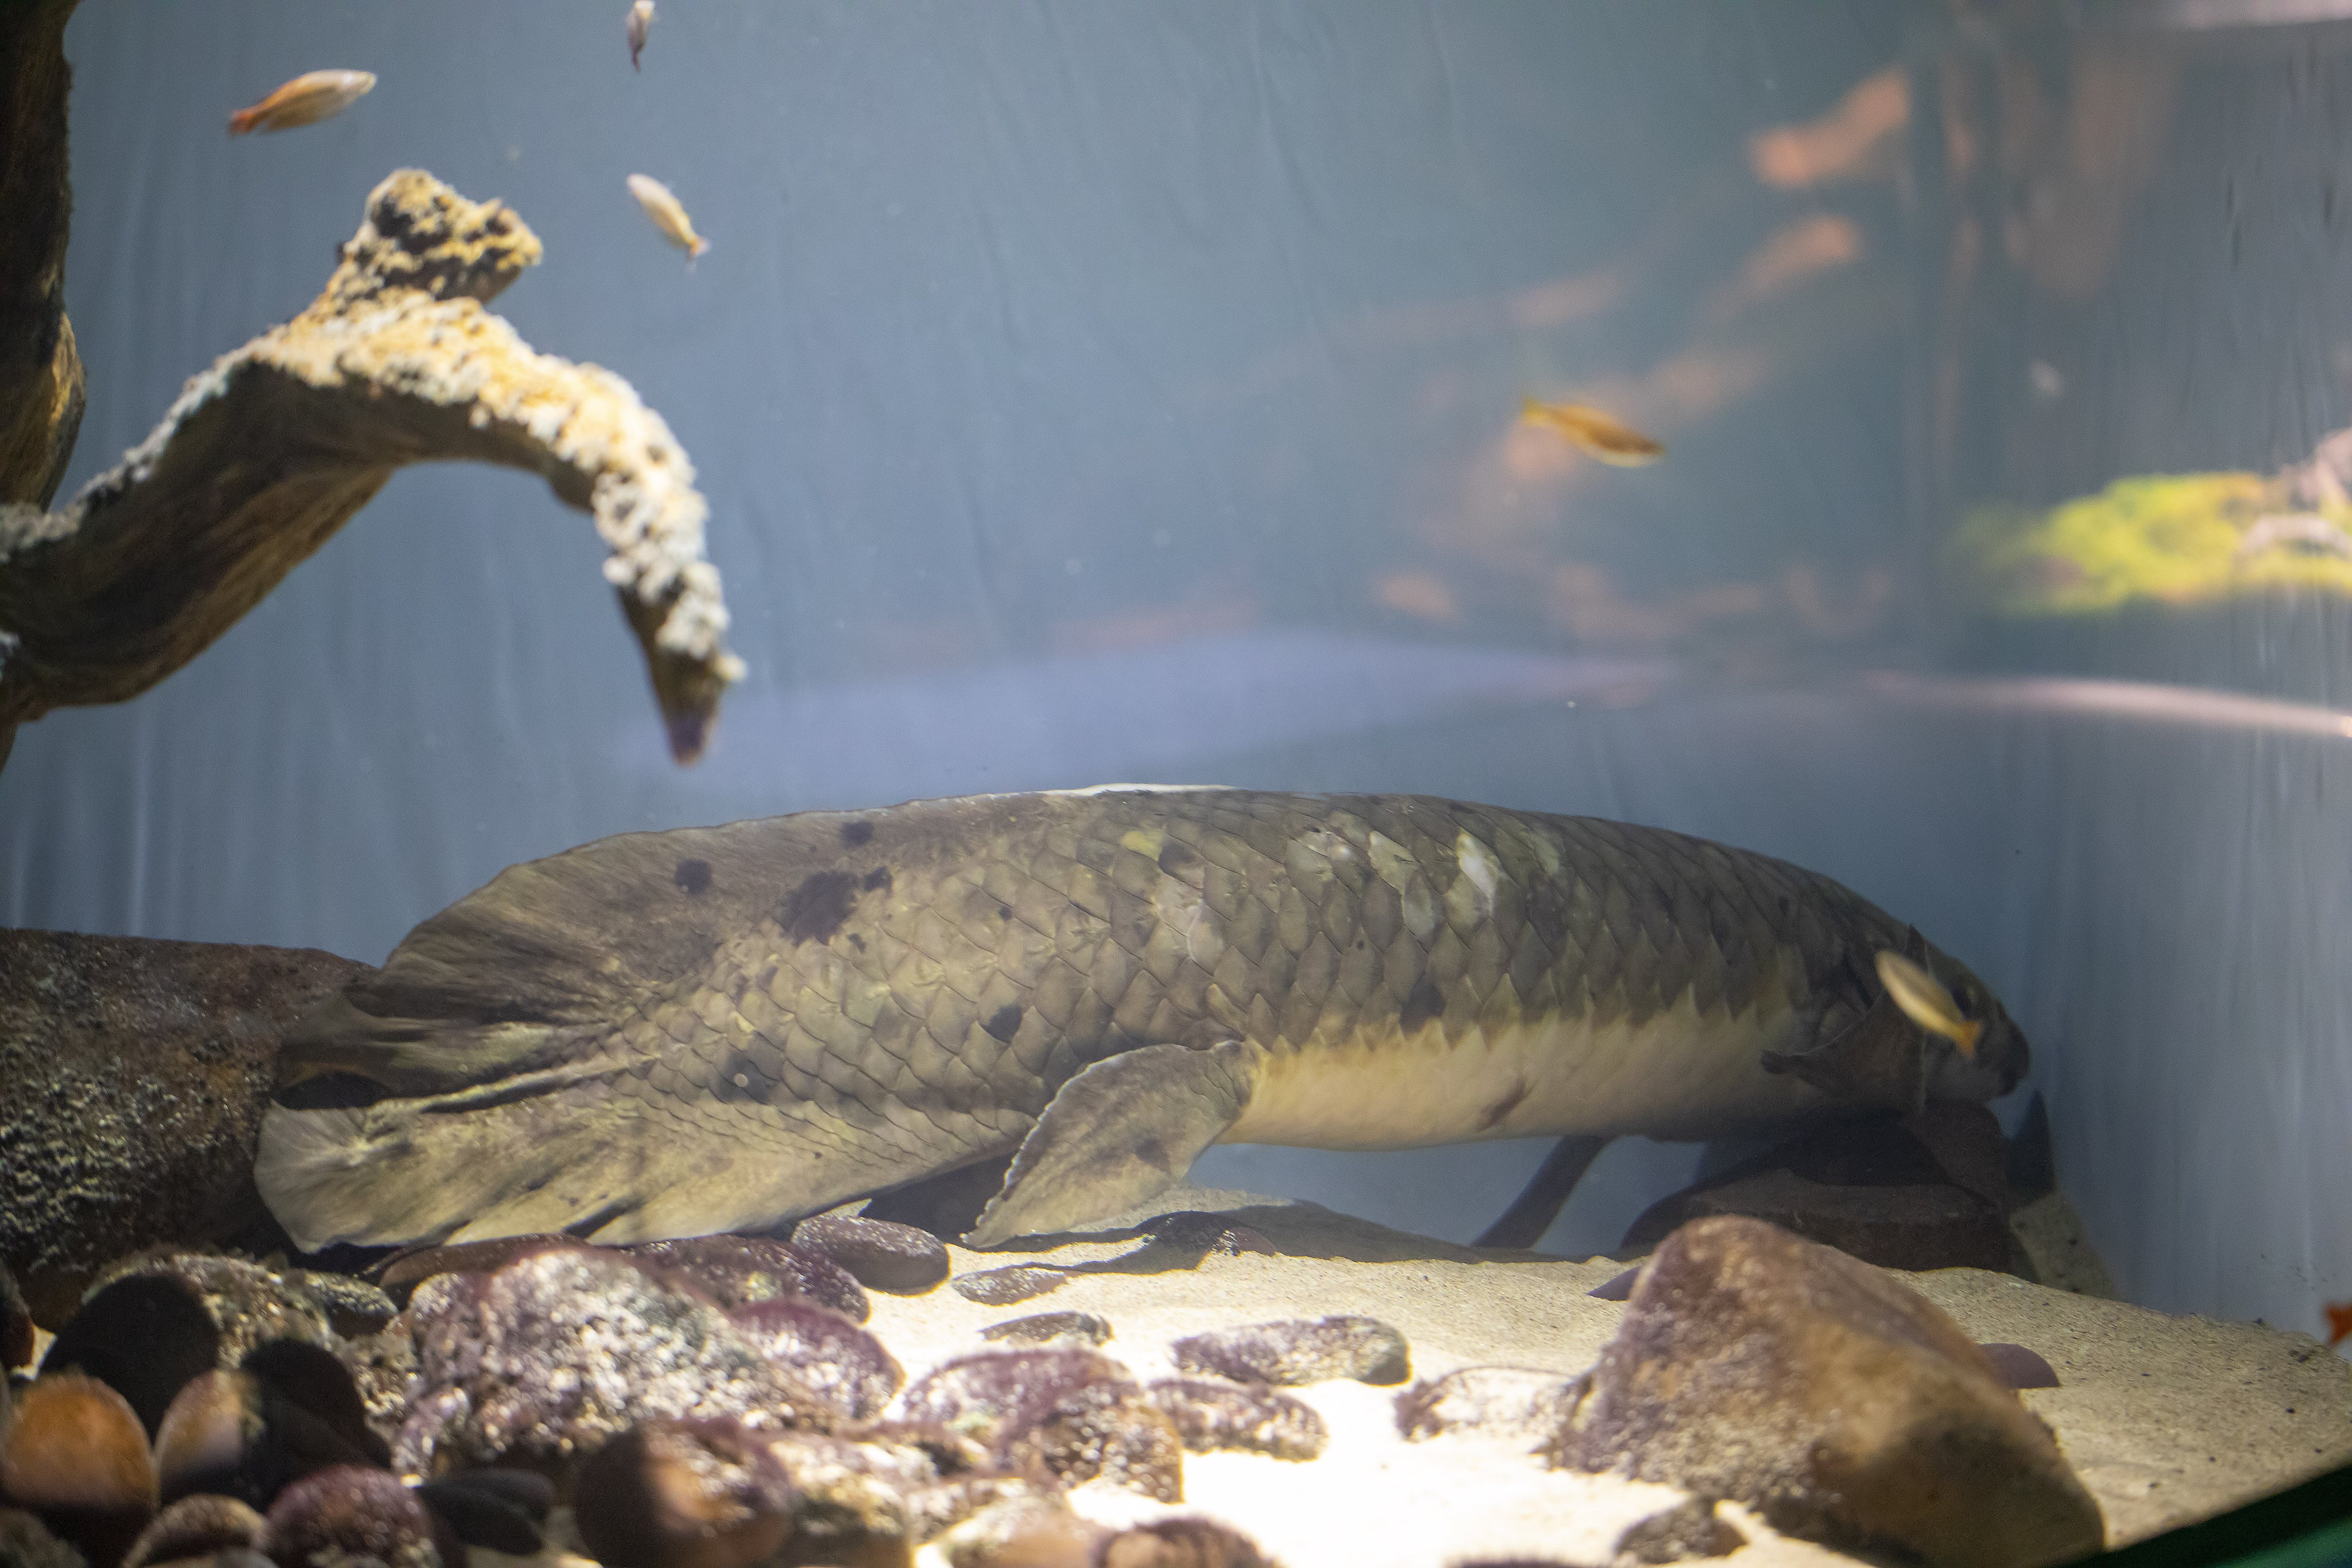 Methuselah: An Australian lungfish